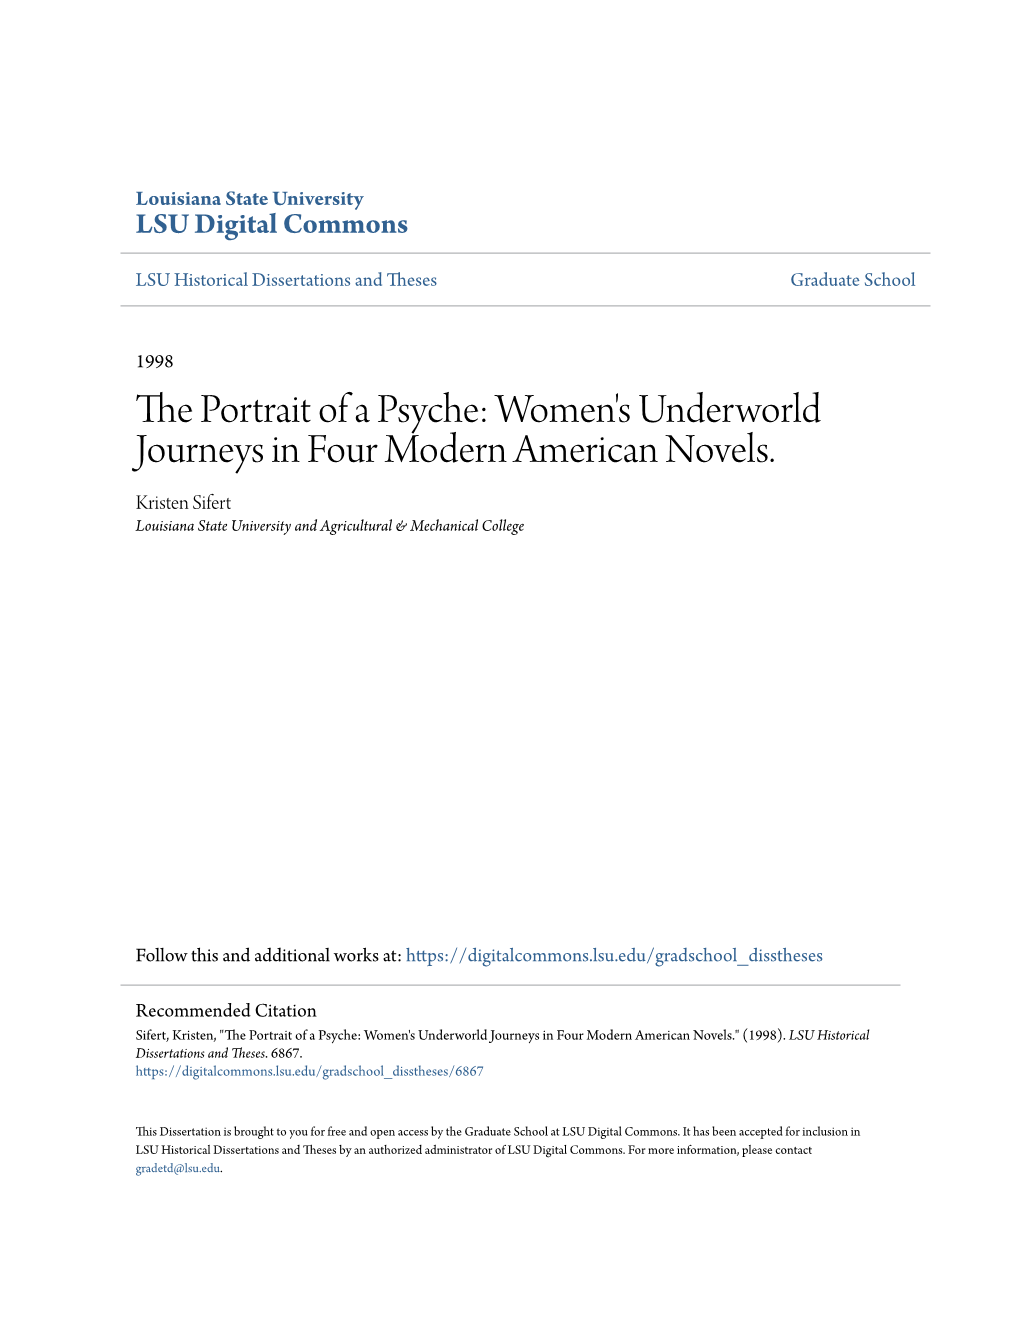 The Portrait of a Psyche: Women's Underworld Journeys in Four Modern American Novels